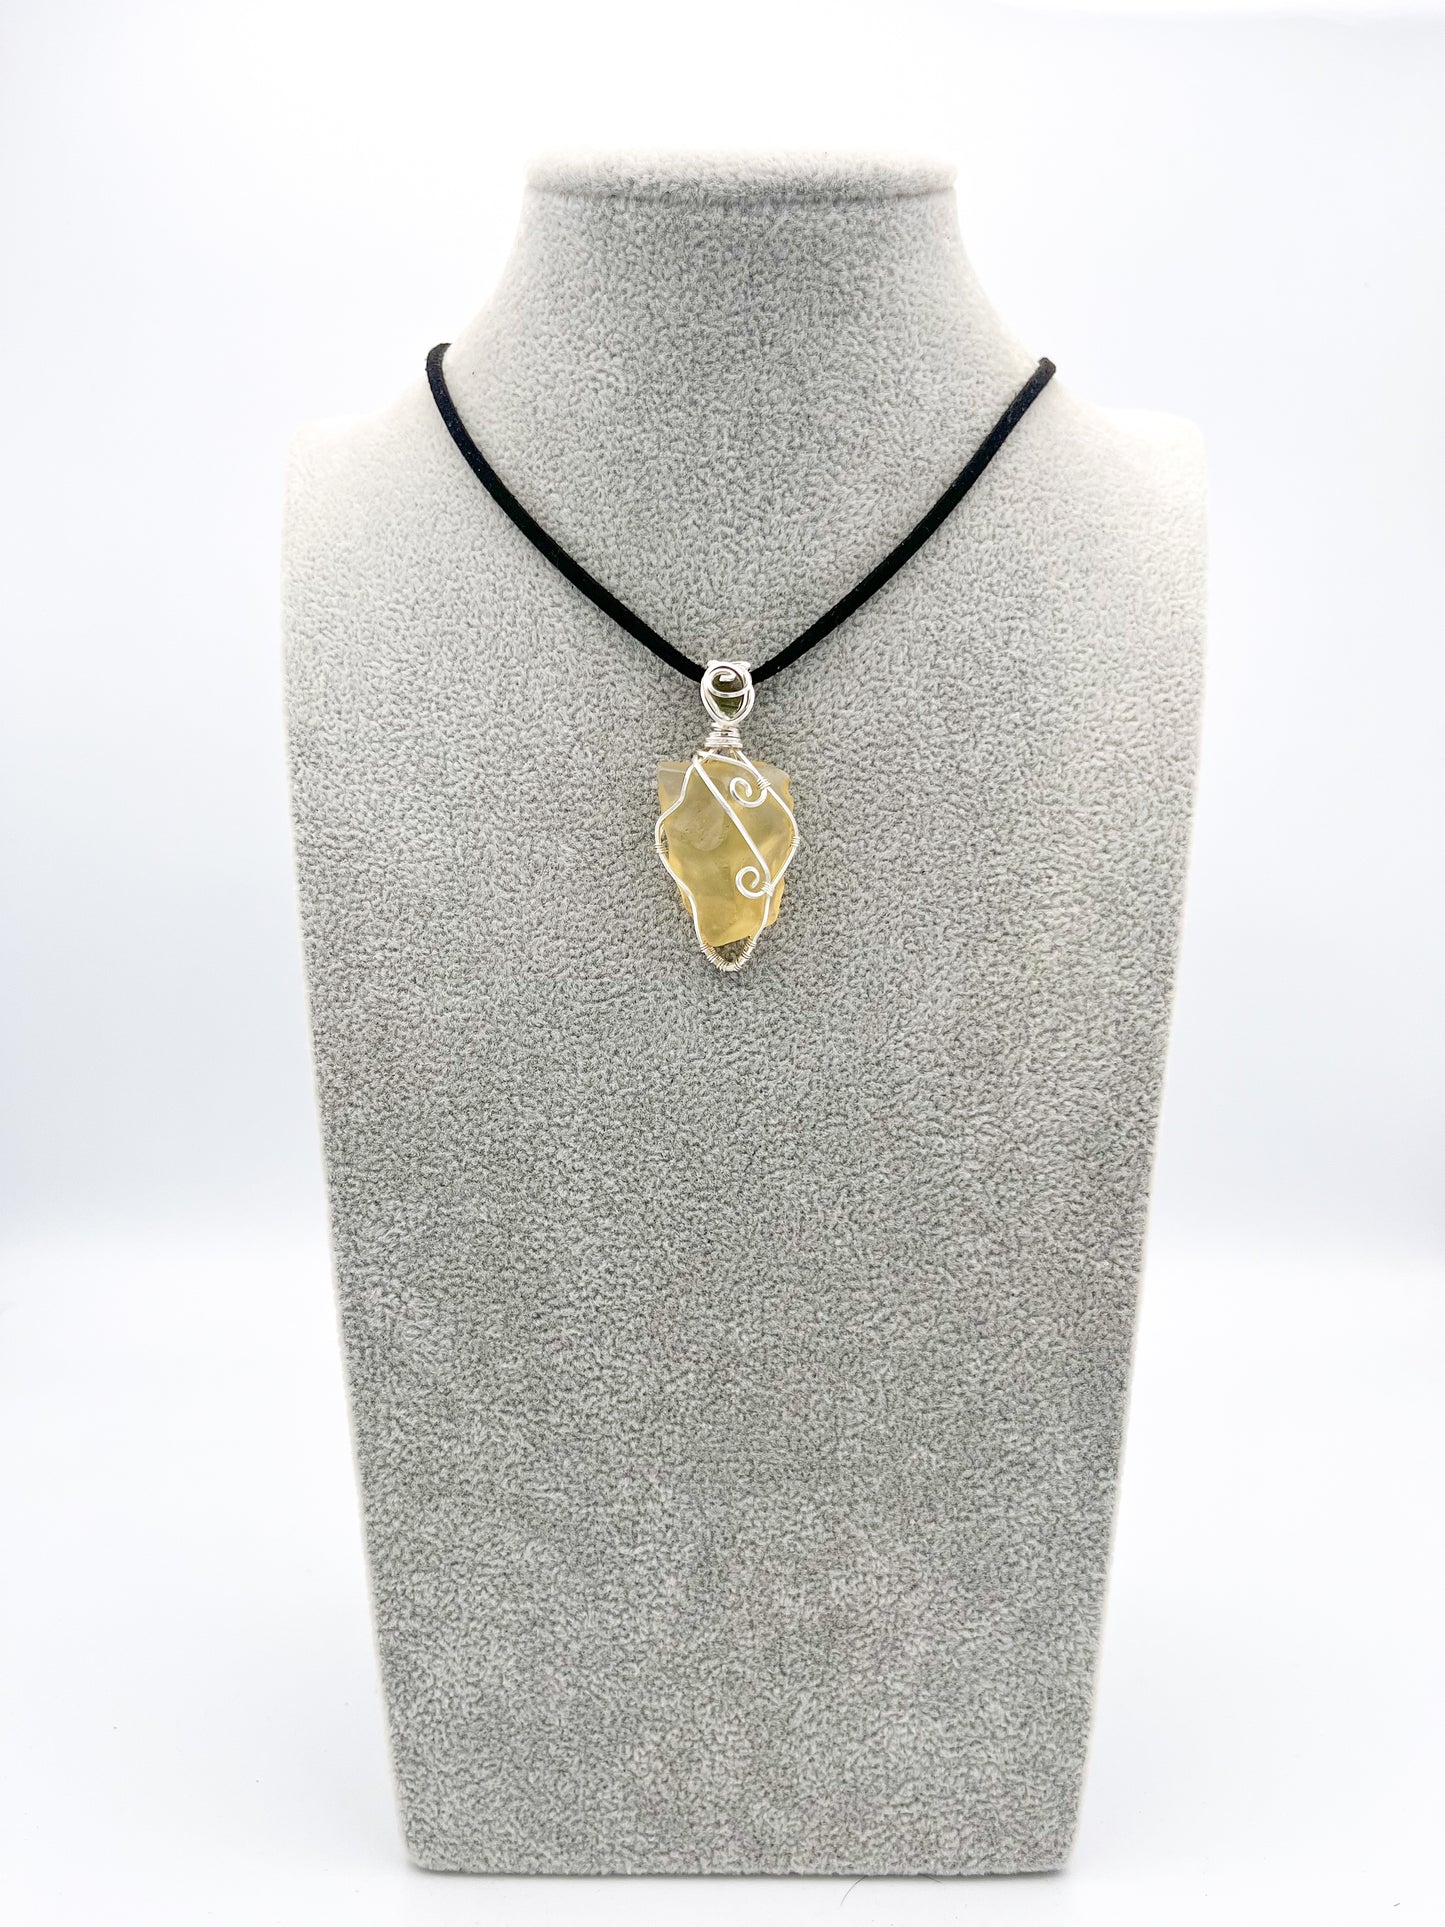 Genuine Libyan Desert Glass + Moldavite Silver Pendant, wire wrapped jewelry, handmade gift